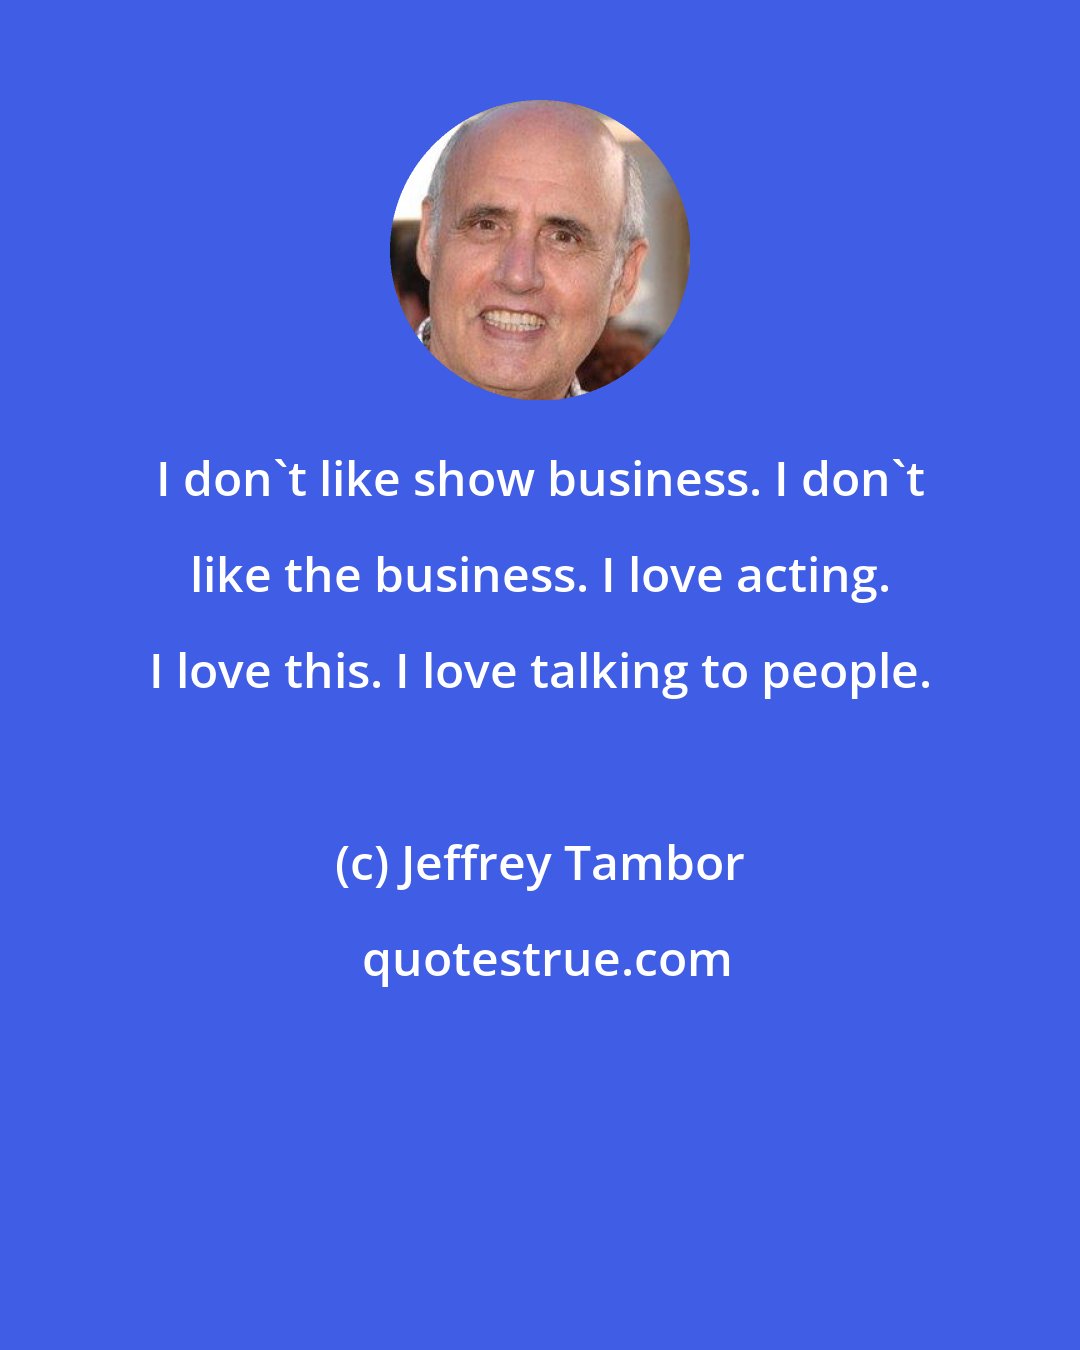 Jeffrey Tambor: I don't like show business. I don't like the business. I love acting. I love this. I love talking to people.